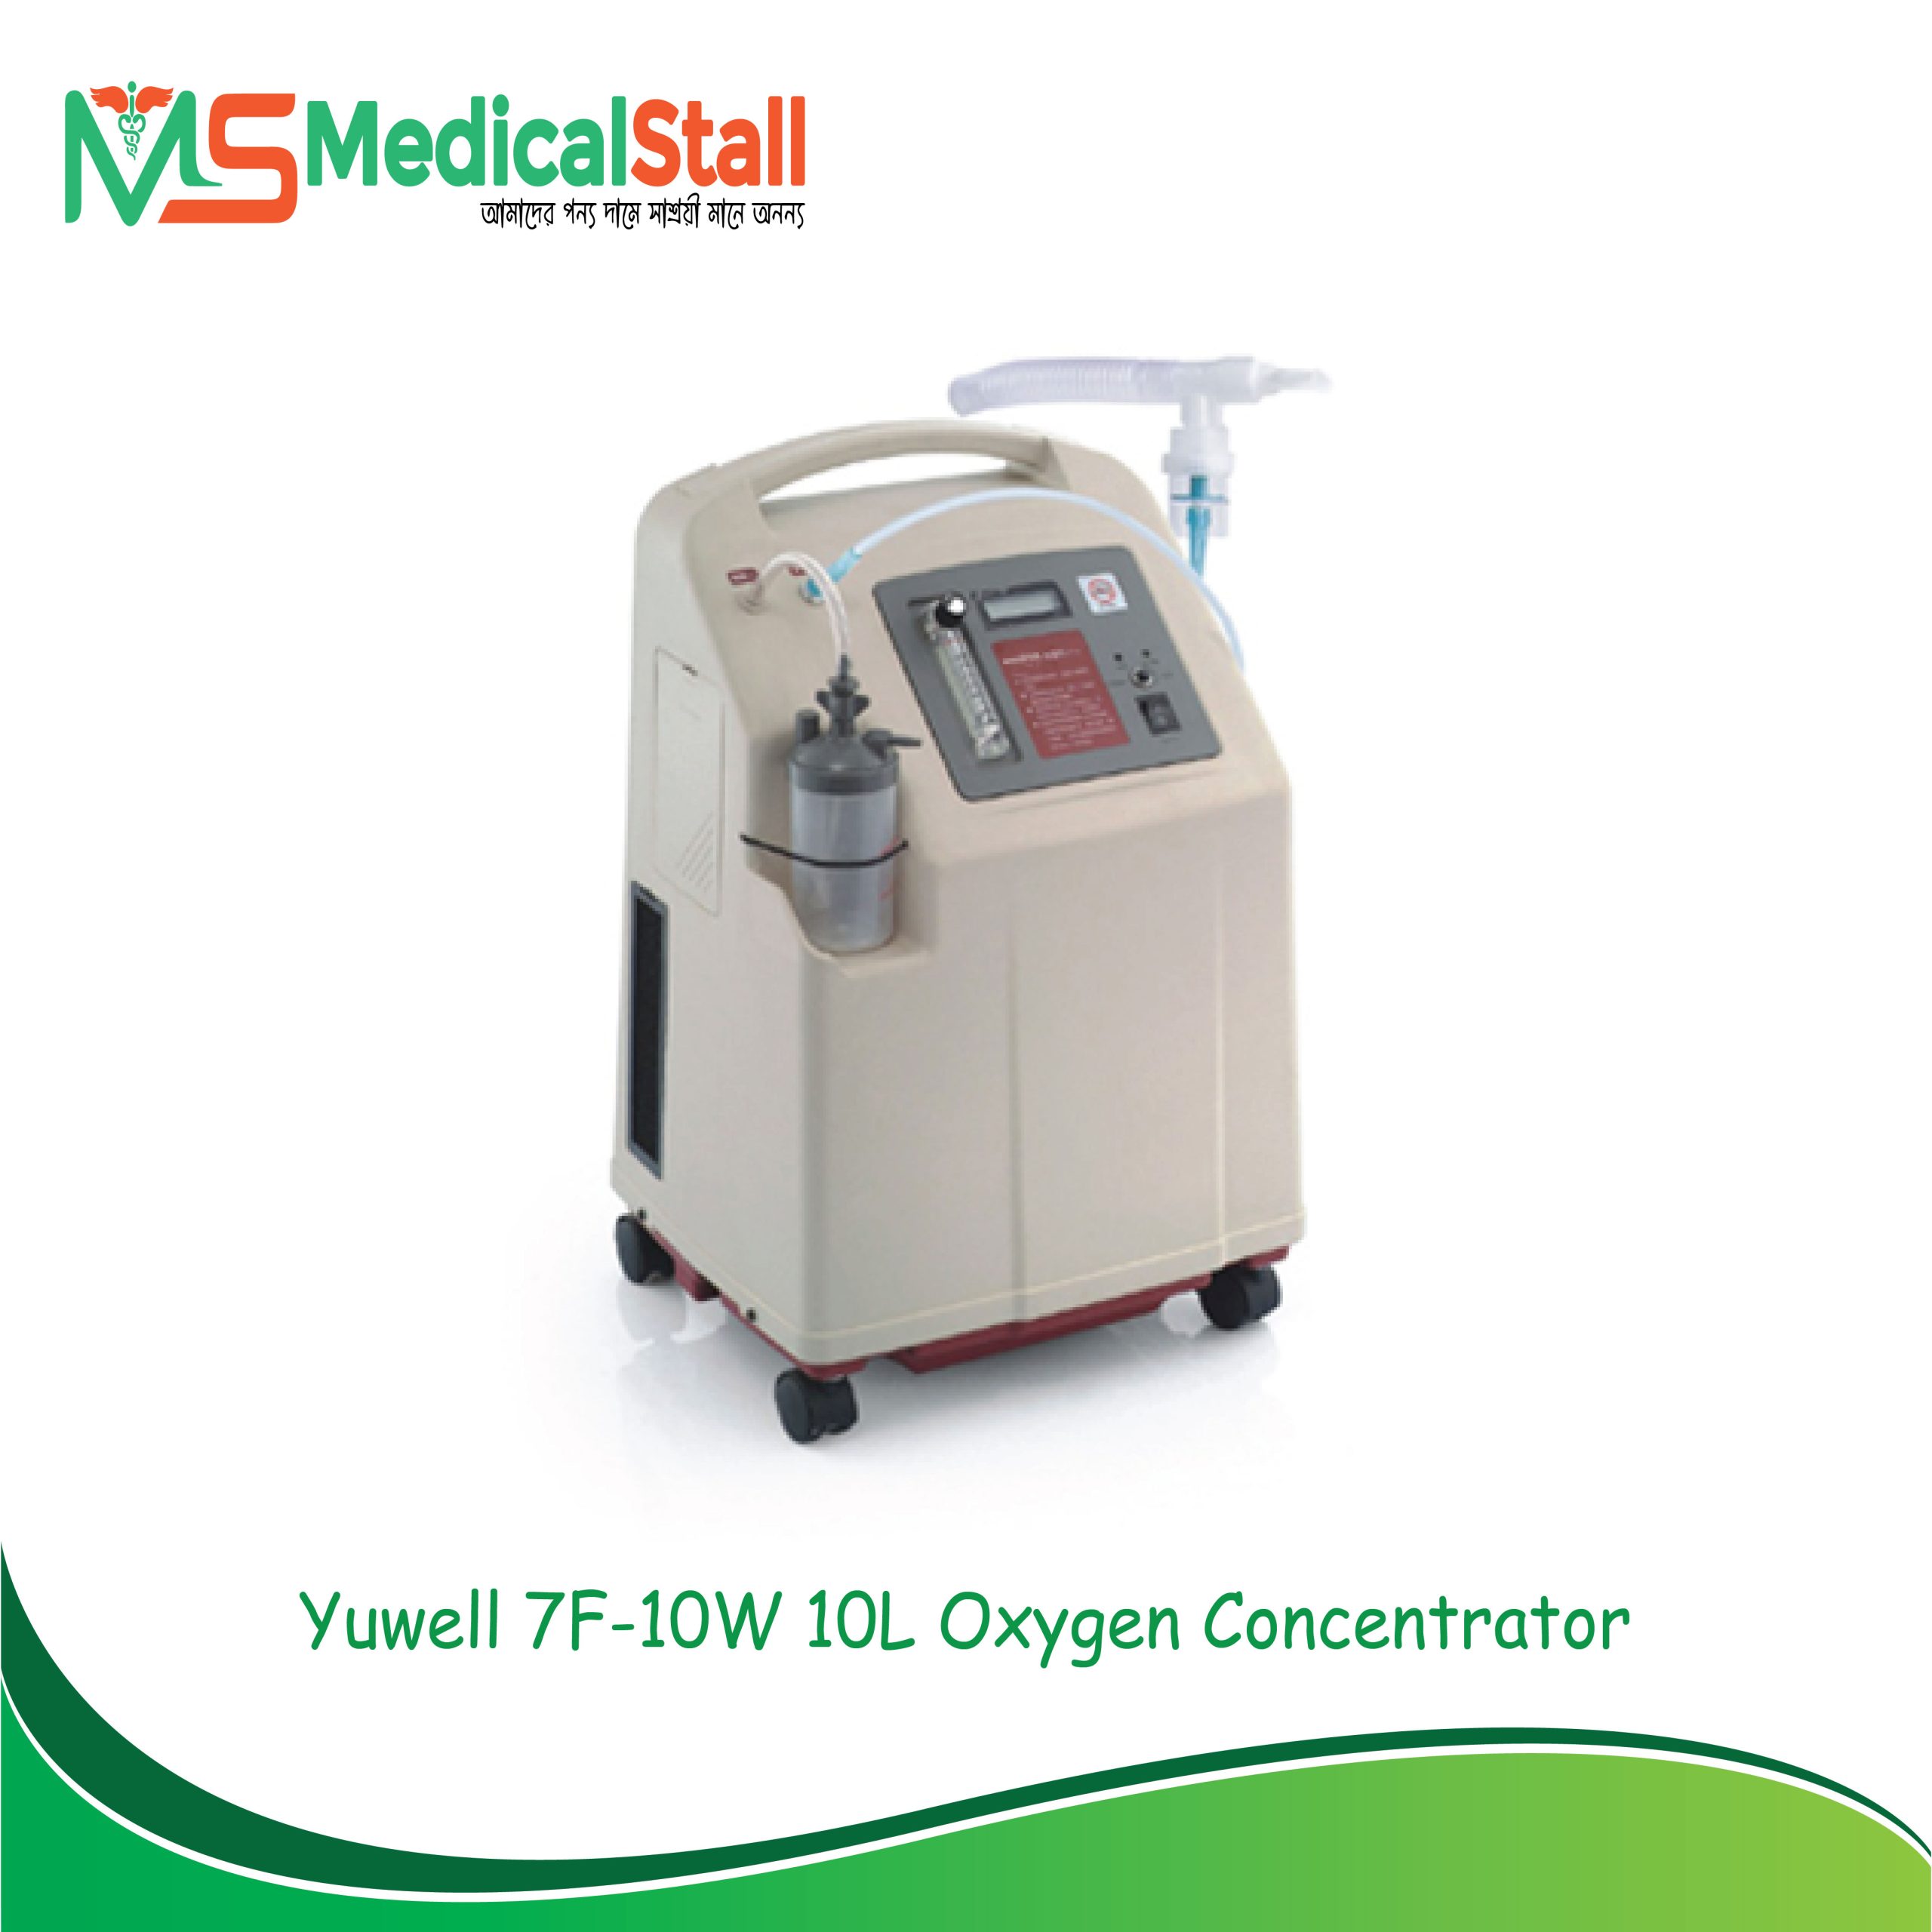 Yuwell 10L 7F-10W Oxygen Concentrator